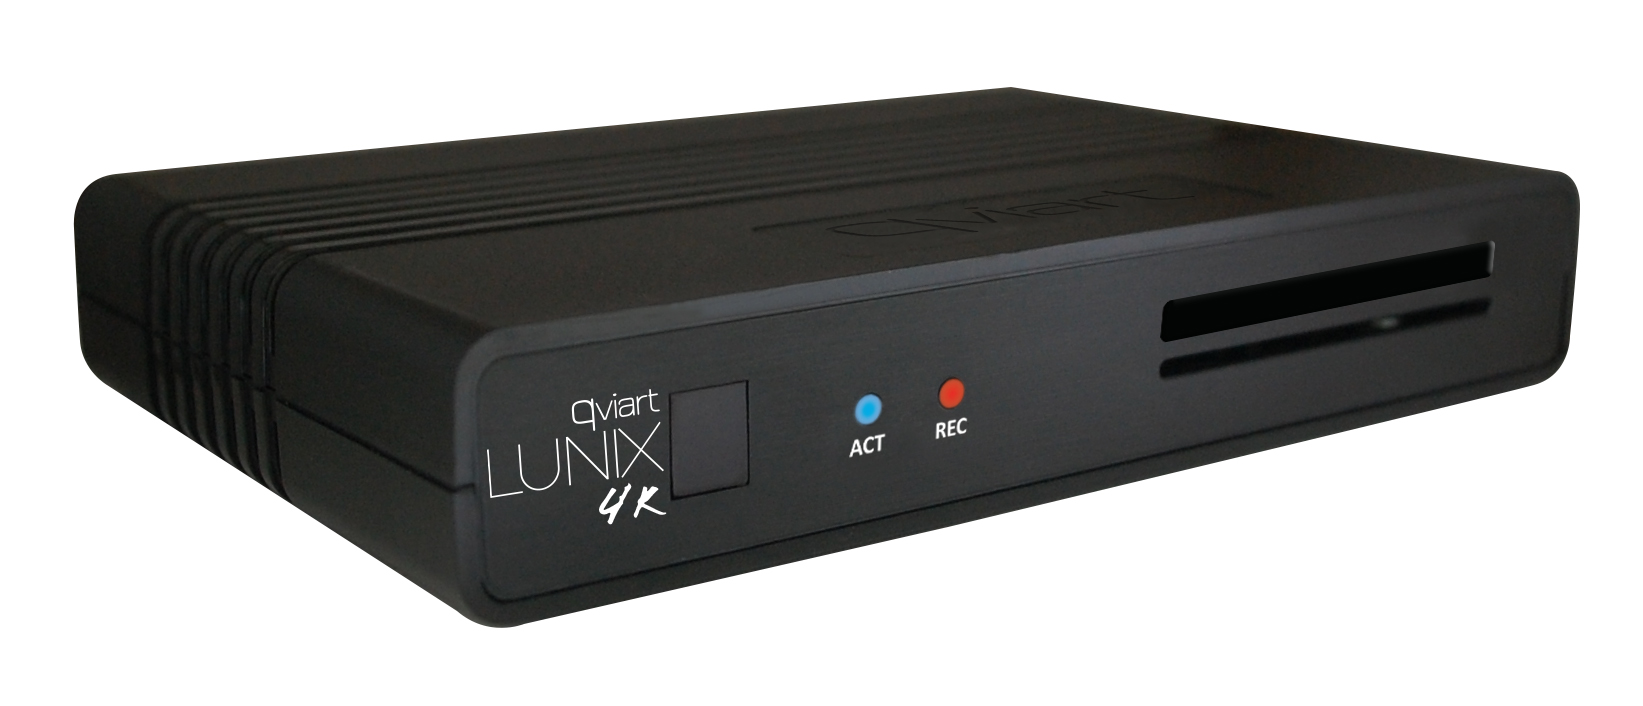 Lunix ¤k DVB Receiver - distributed by Tektronic.dk